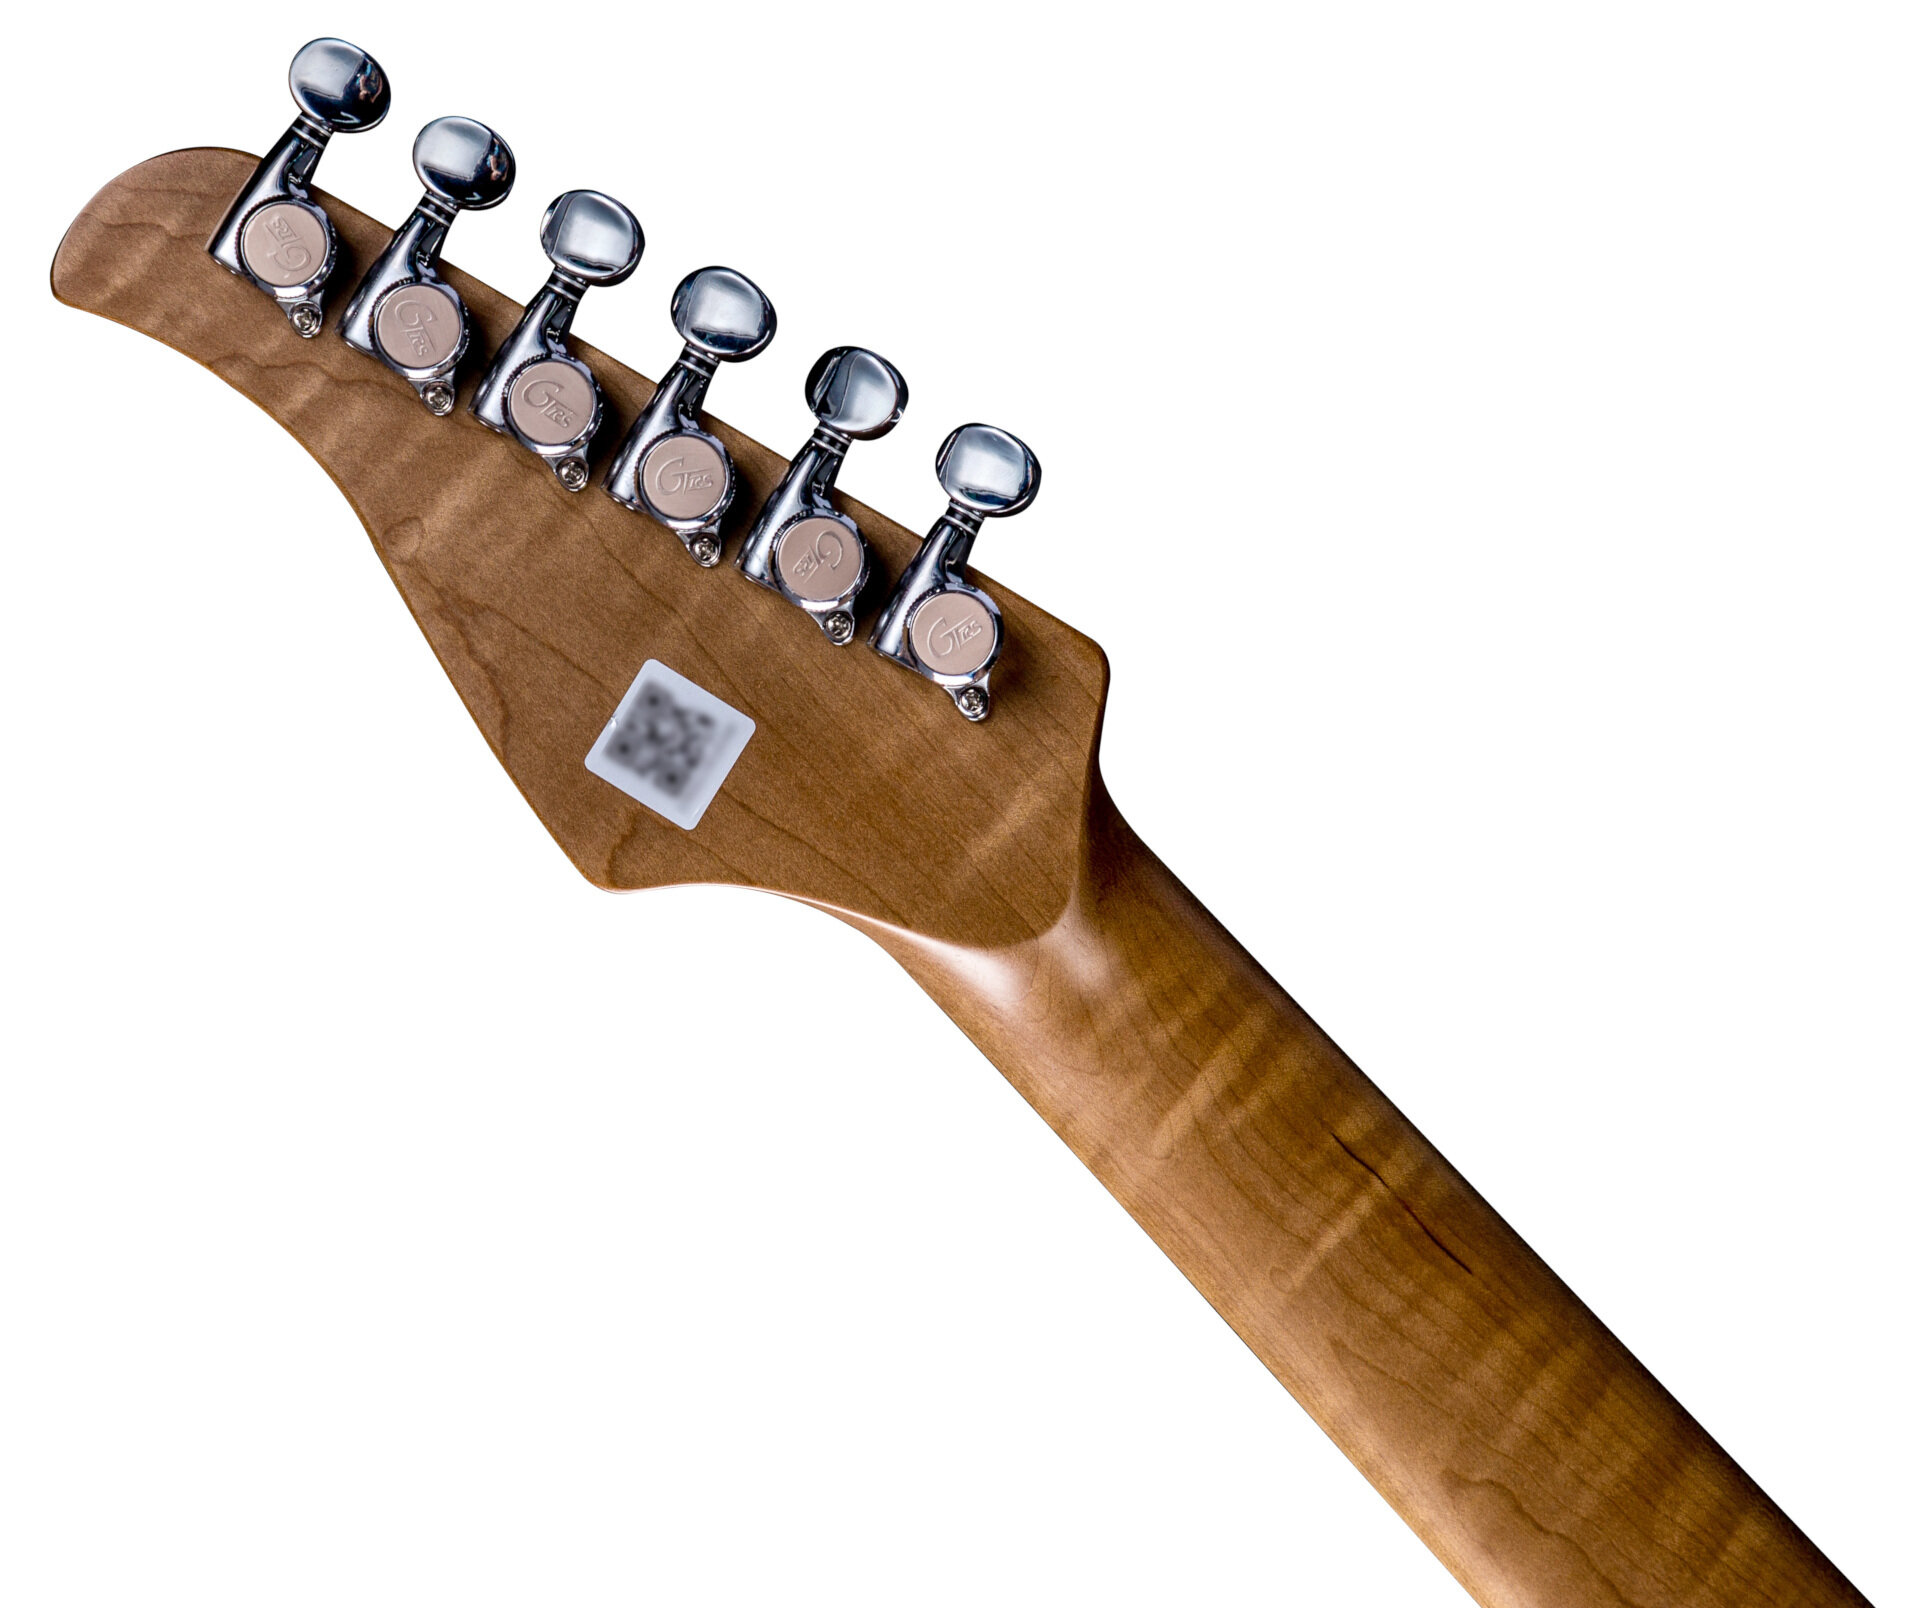 Mooer Gtrs P800 Pro Intelligent Guitar Hss Trem Rw - Fiesta Red - Guitarra eléctrica de modelización - Variation 4